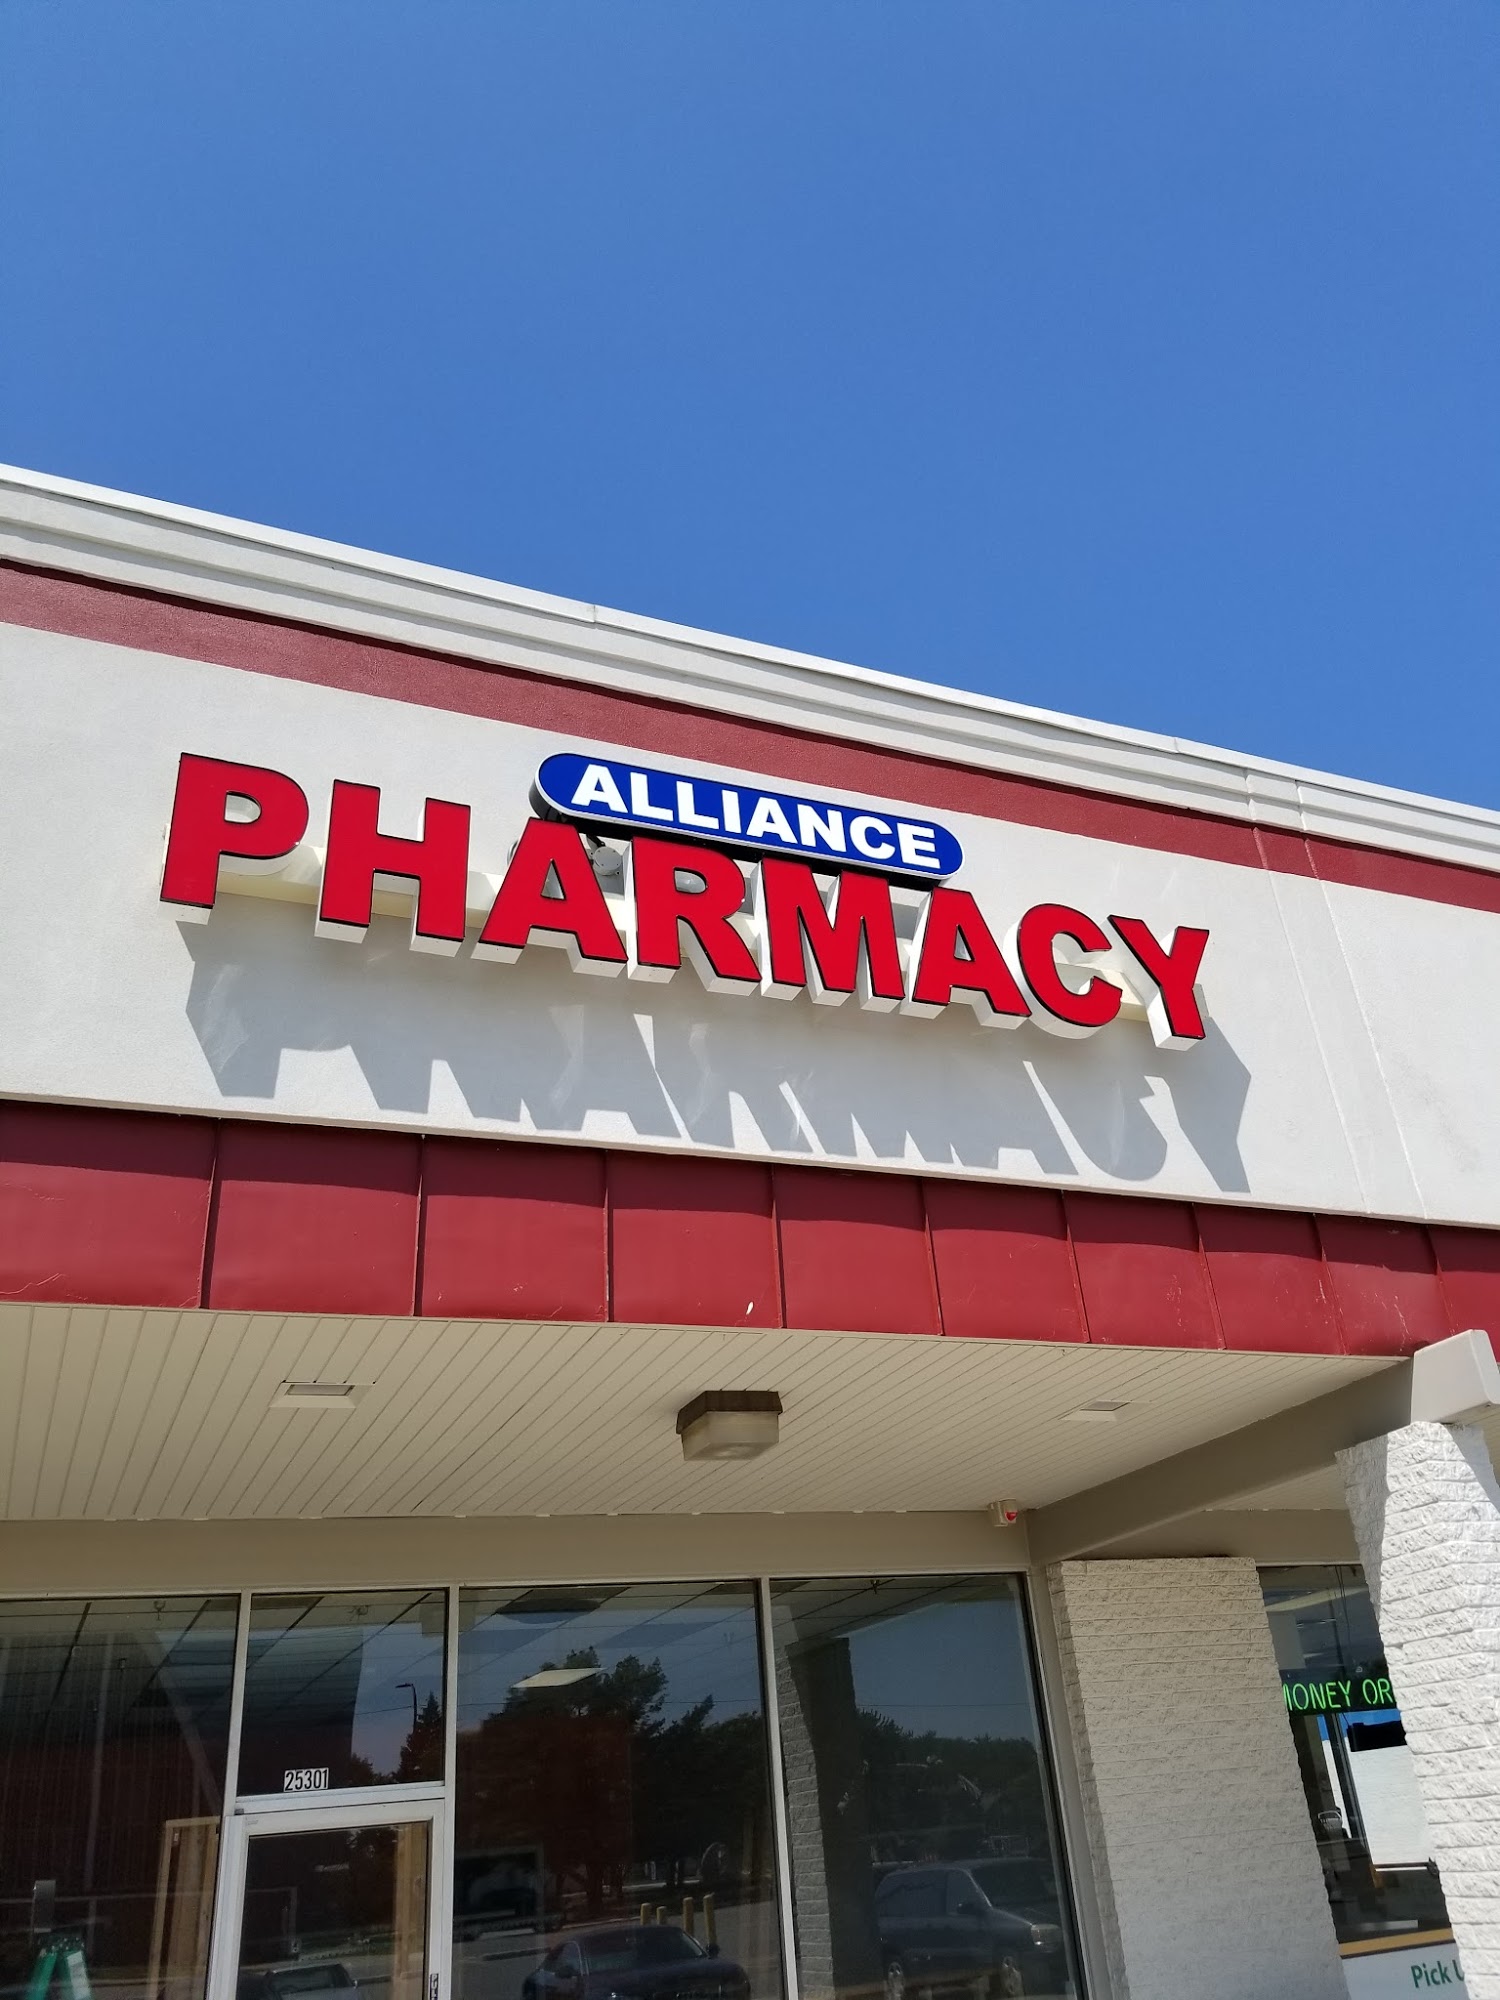 Alliance Pharmacy